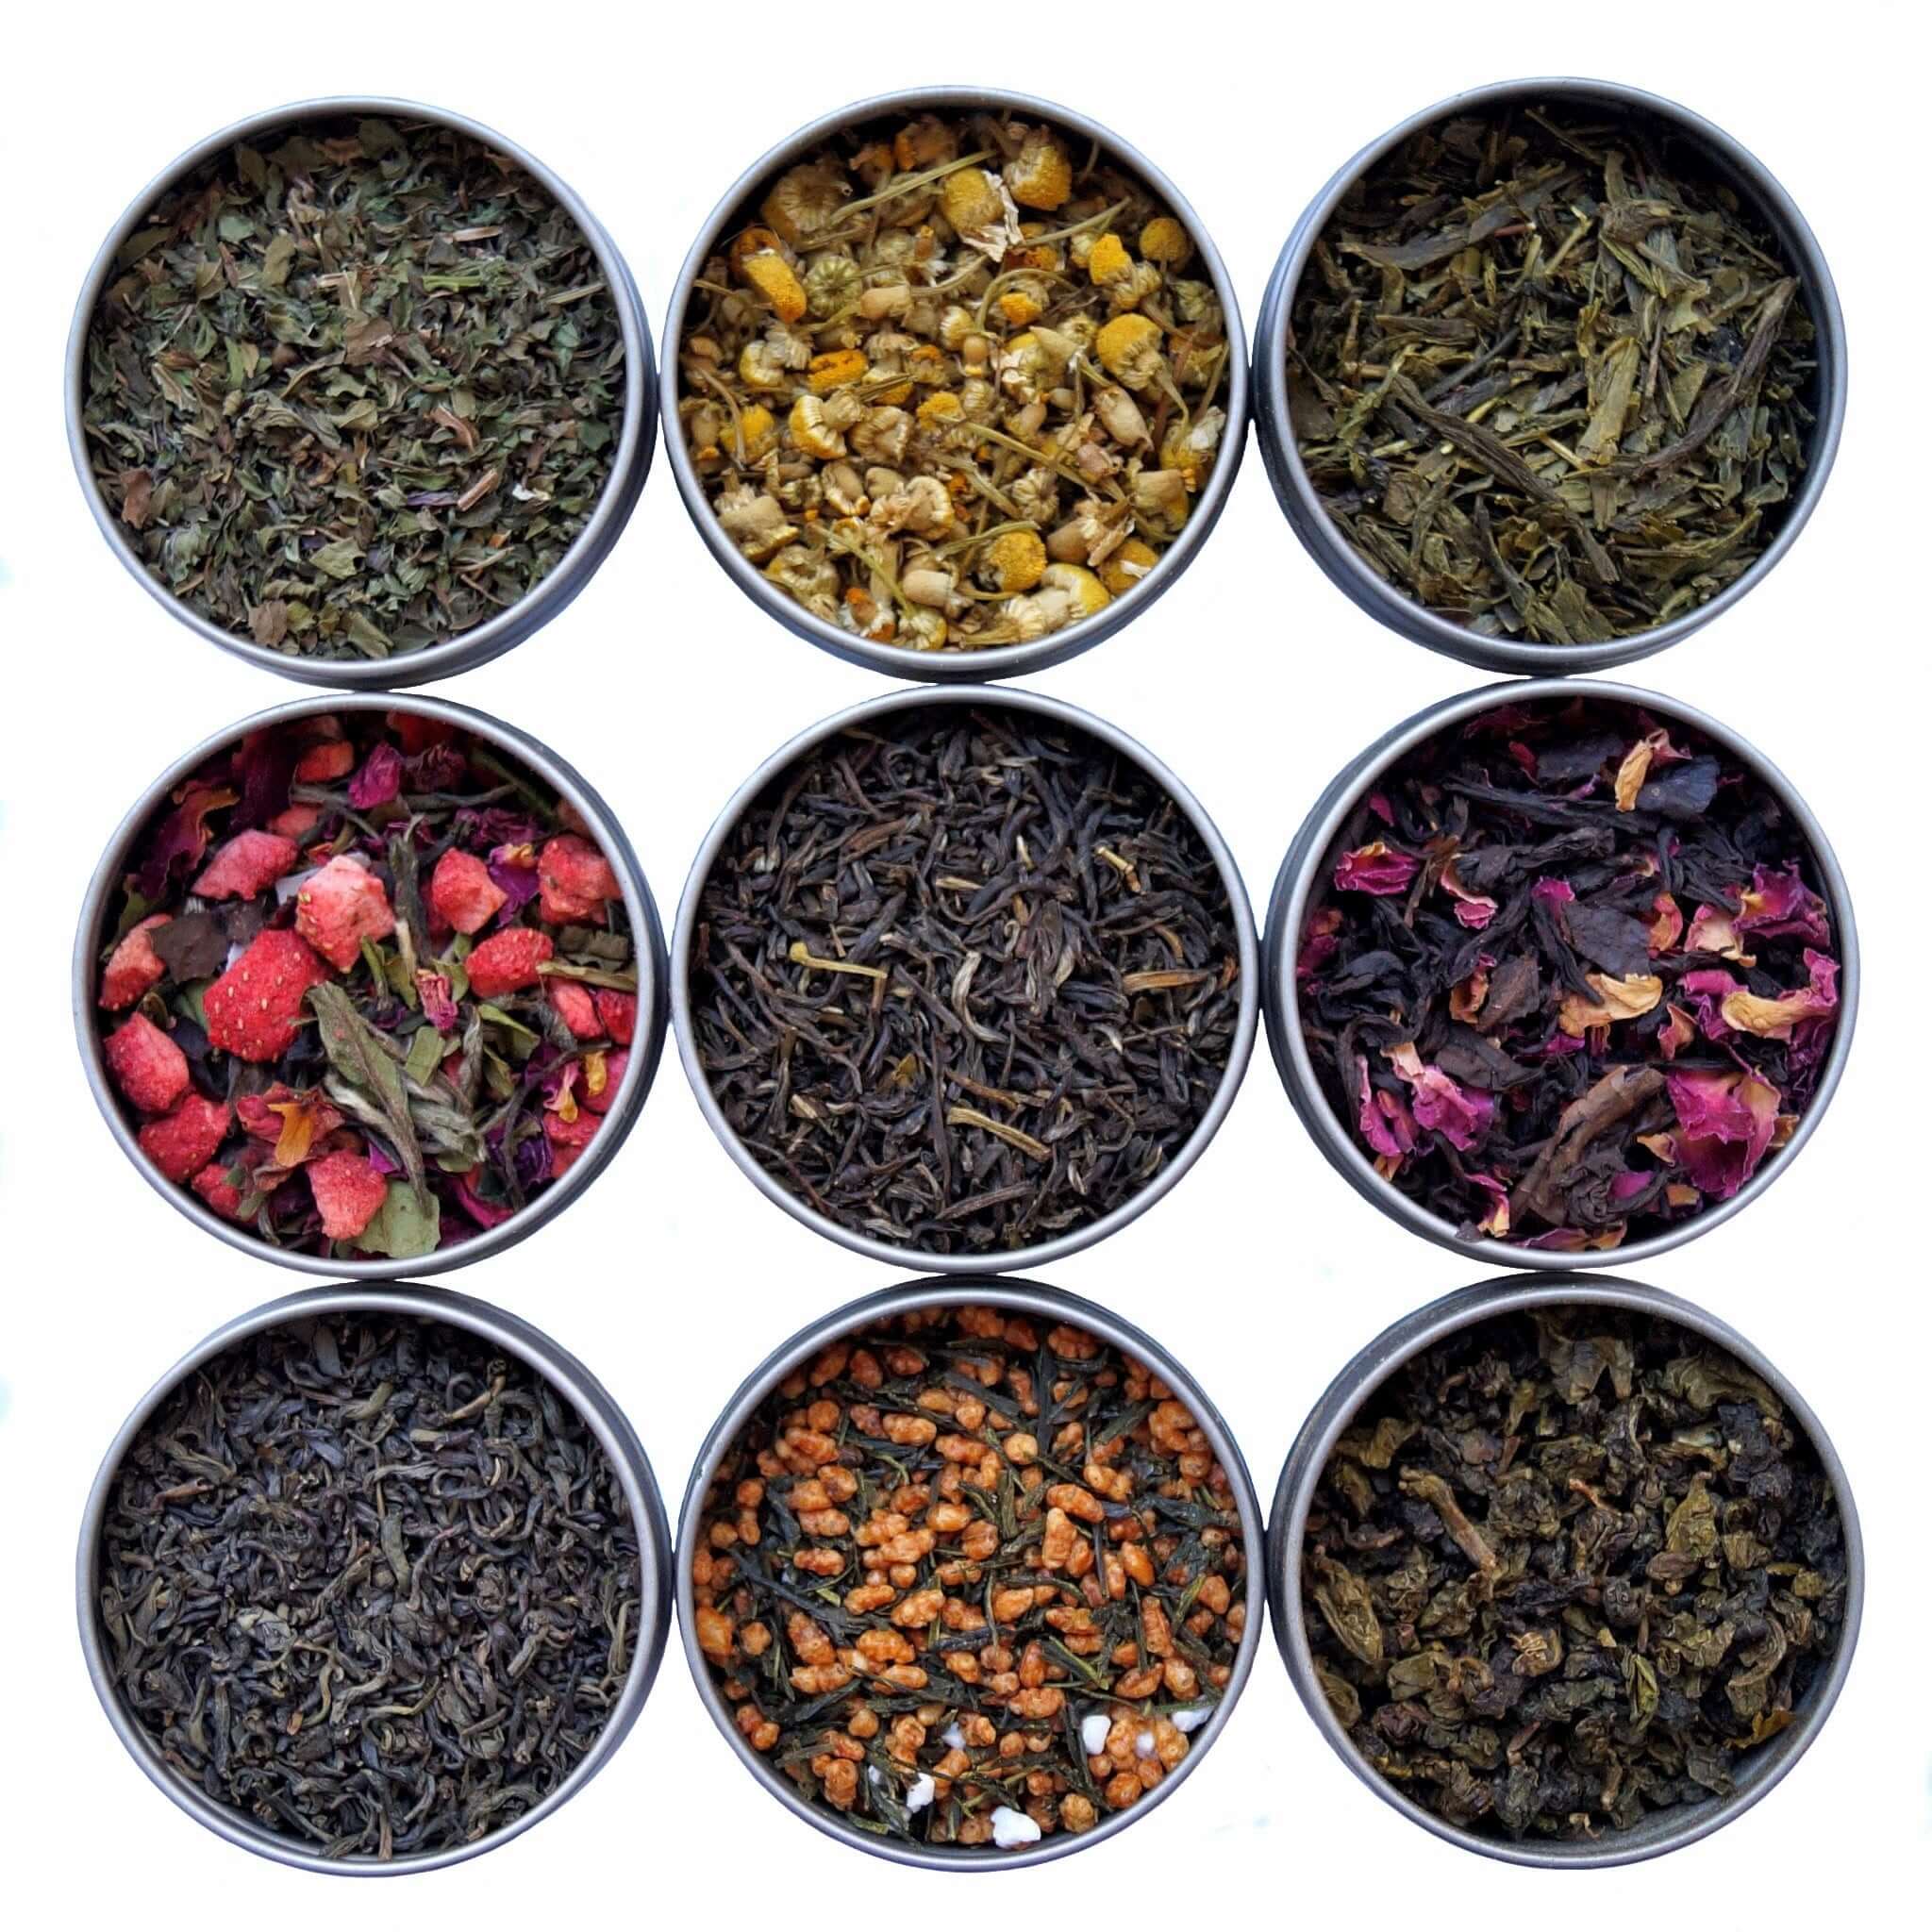 9 Flavor Variety Pack - Loose Leaf Tea Sampler Gift Set - 9 Assorted Loose Leaf Teas & Herbal Tisanes | Heavenly Tea Leaves